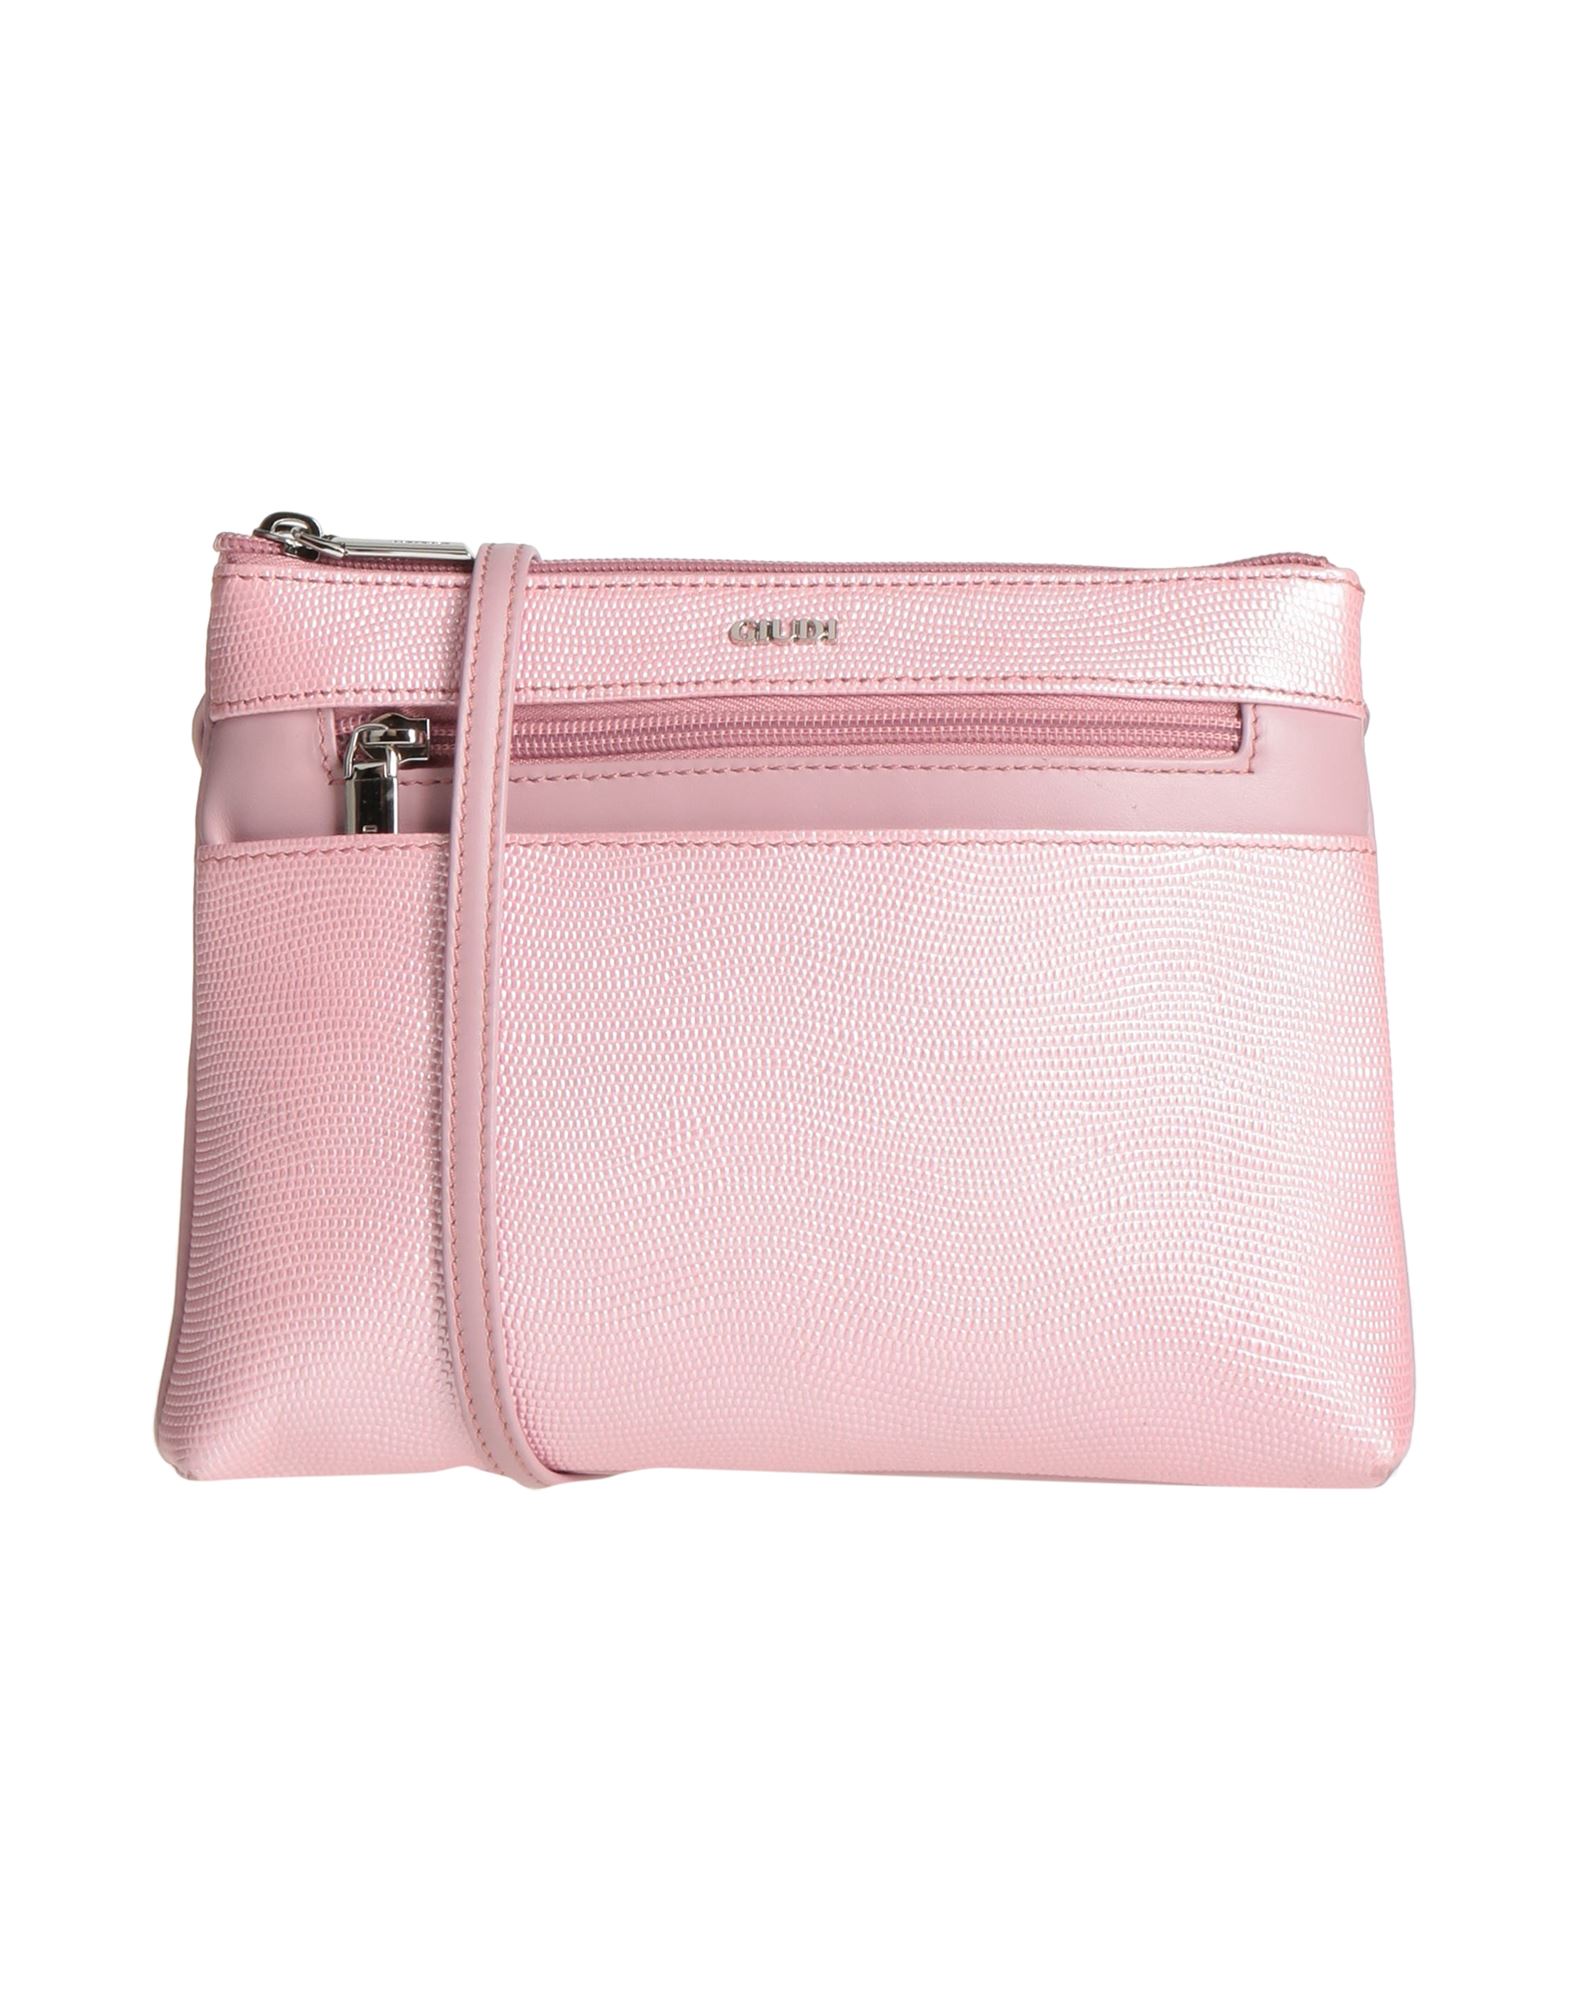 Giudi Handbags In Pink